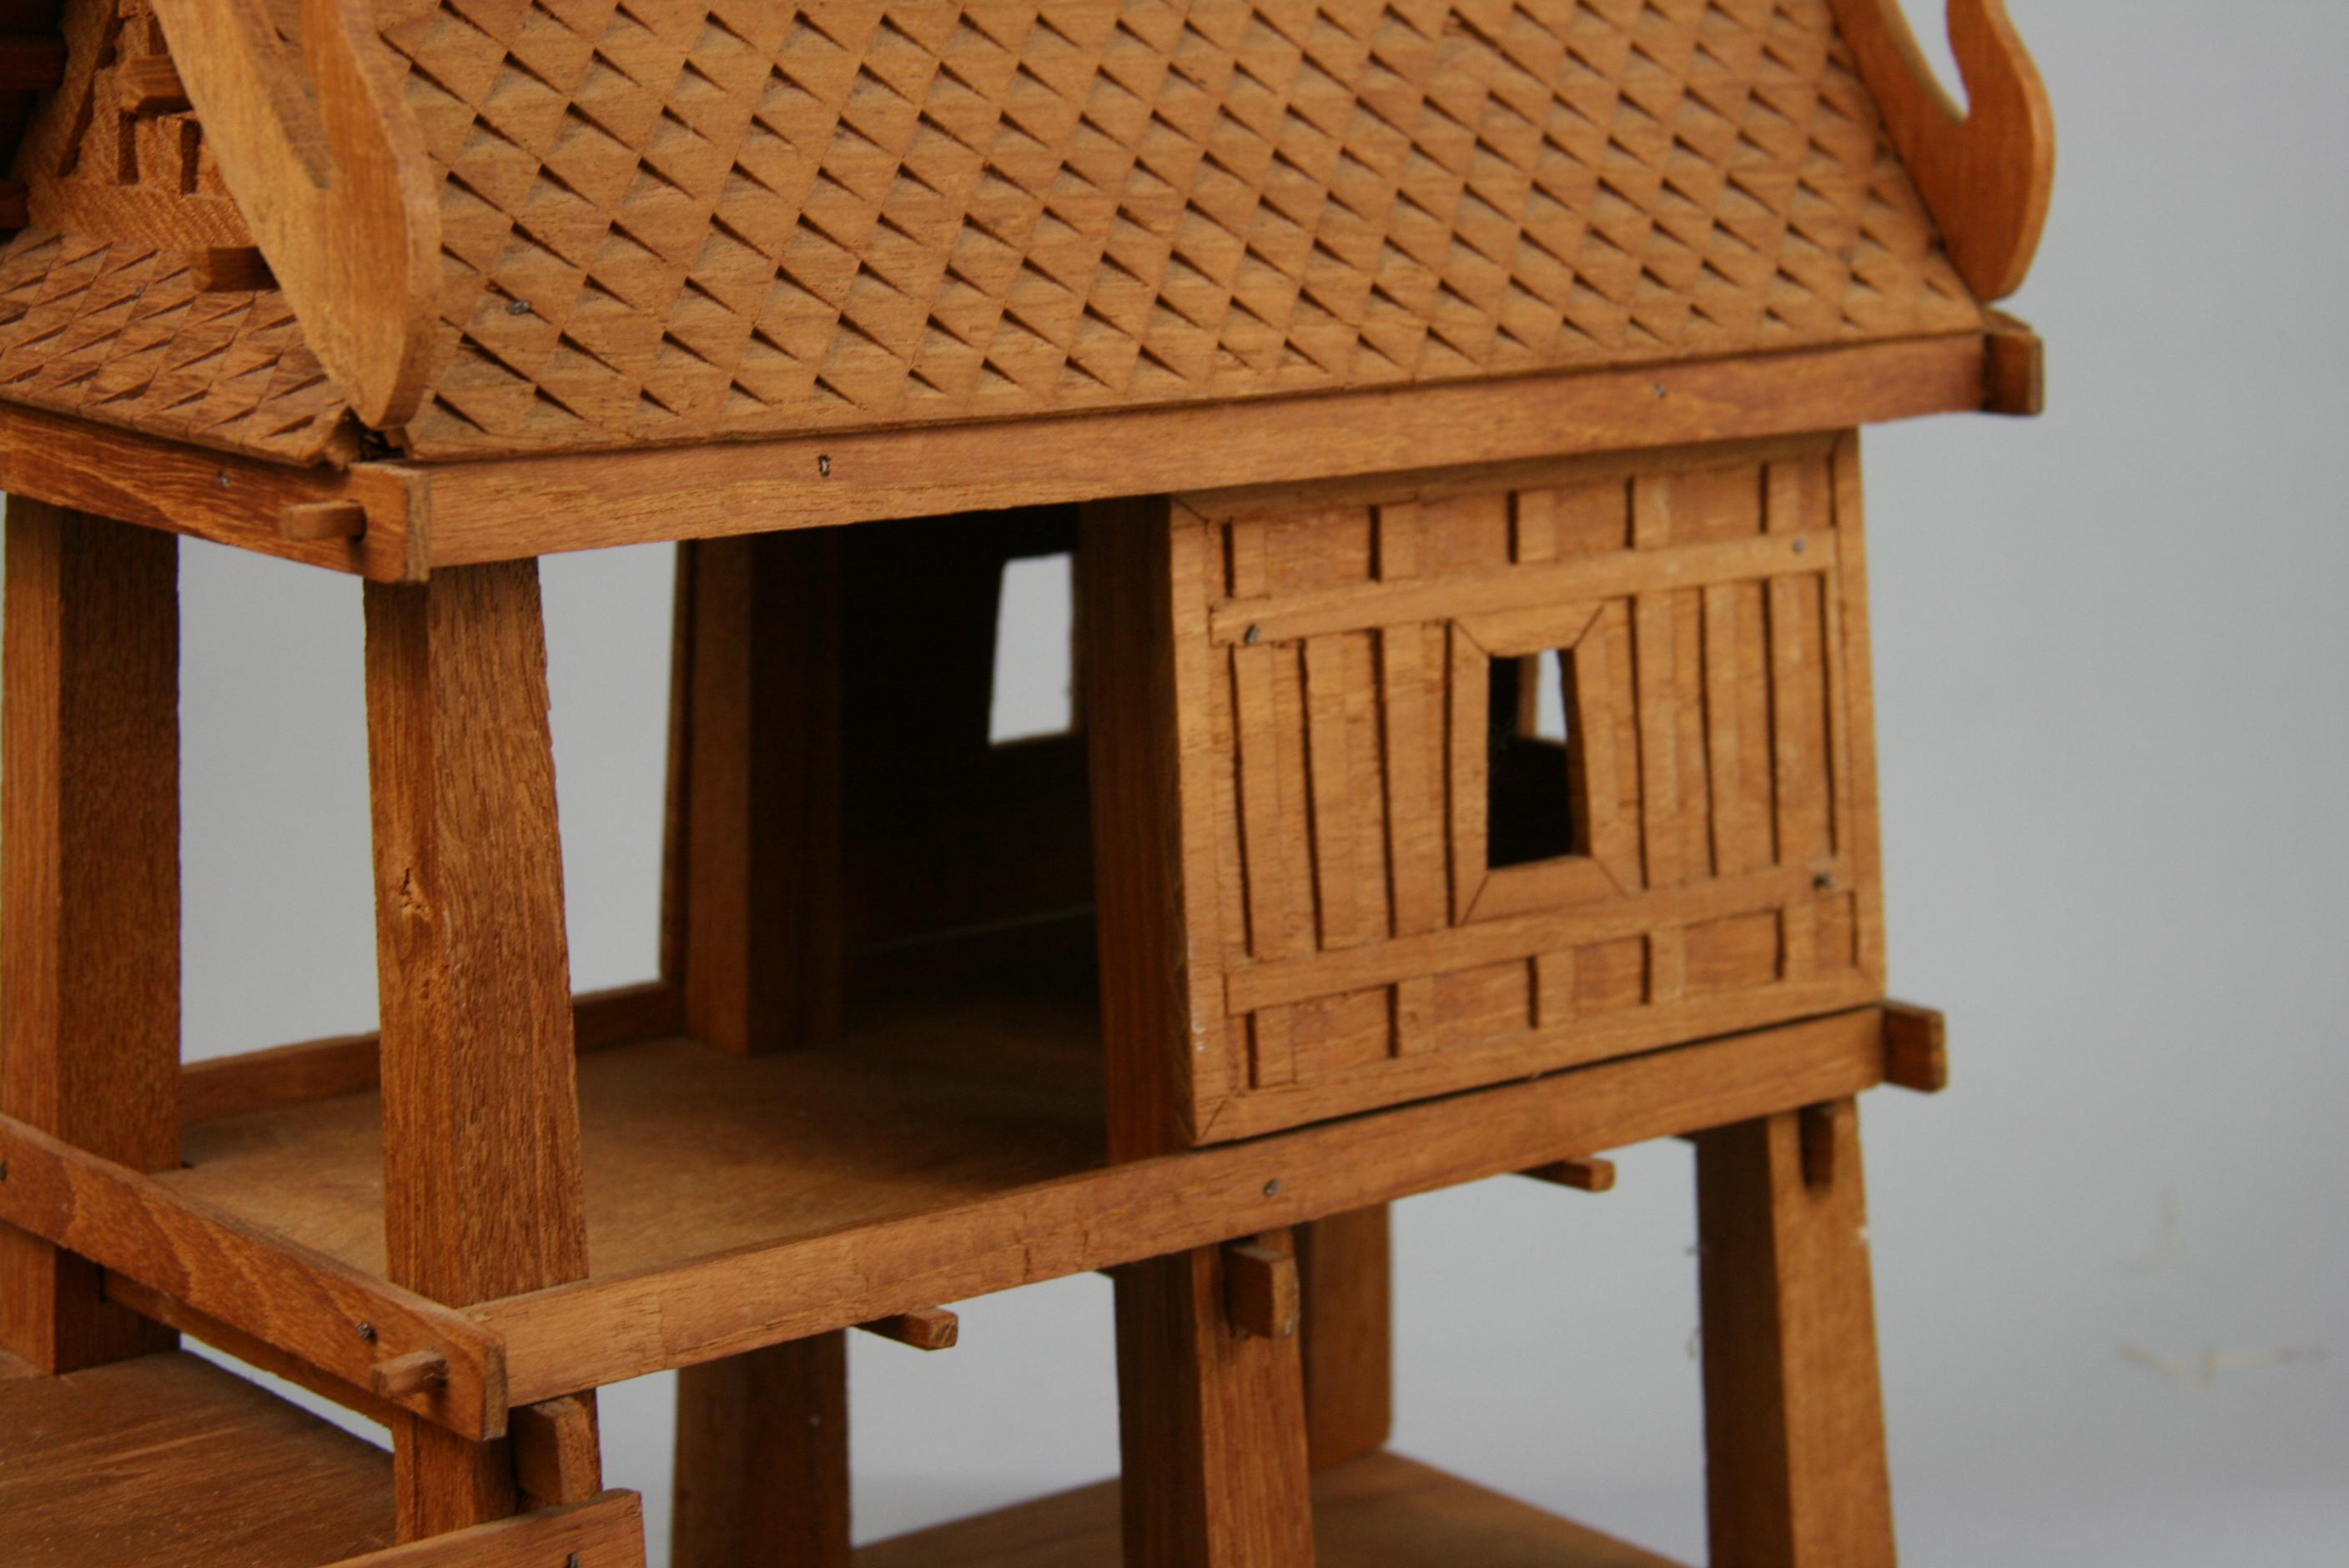 Hardwood Northern Thailand Teak Wood Architectural House Model For Sale